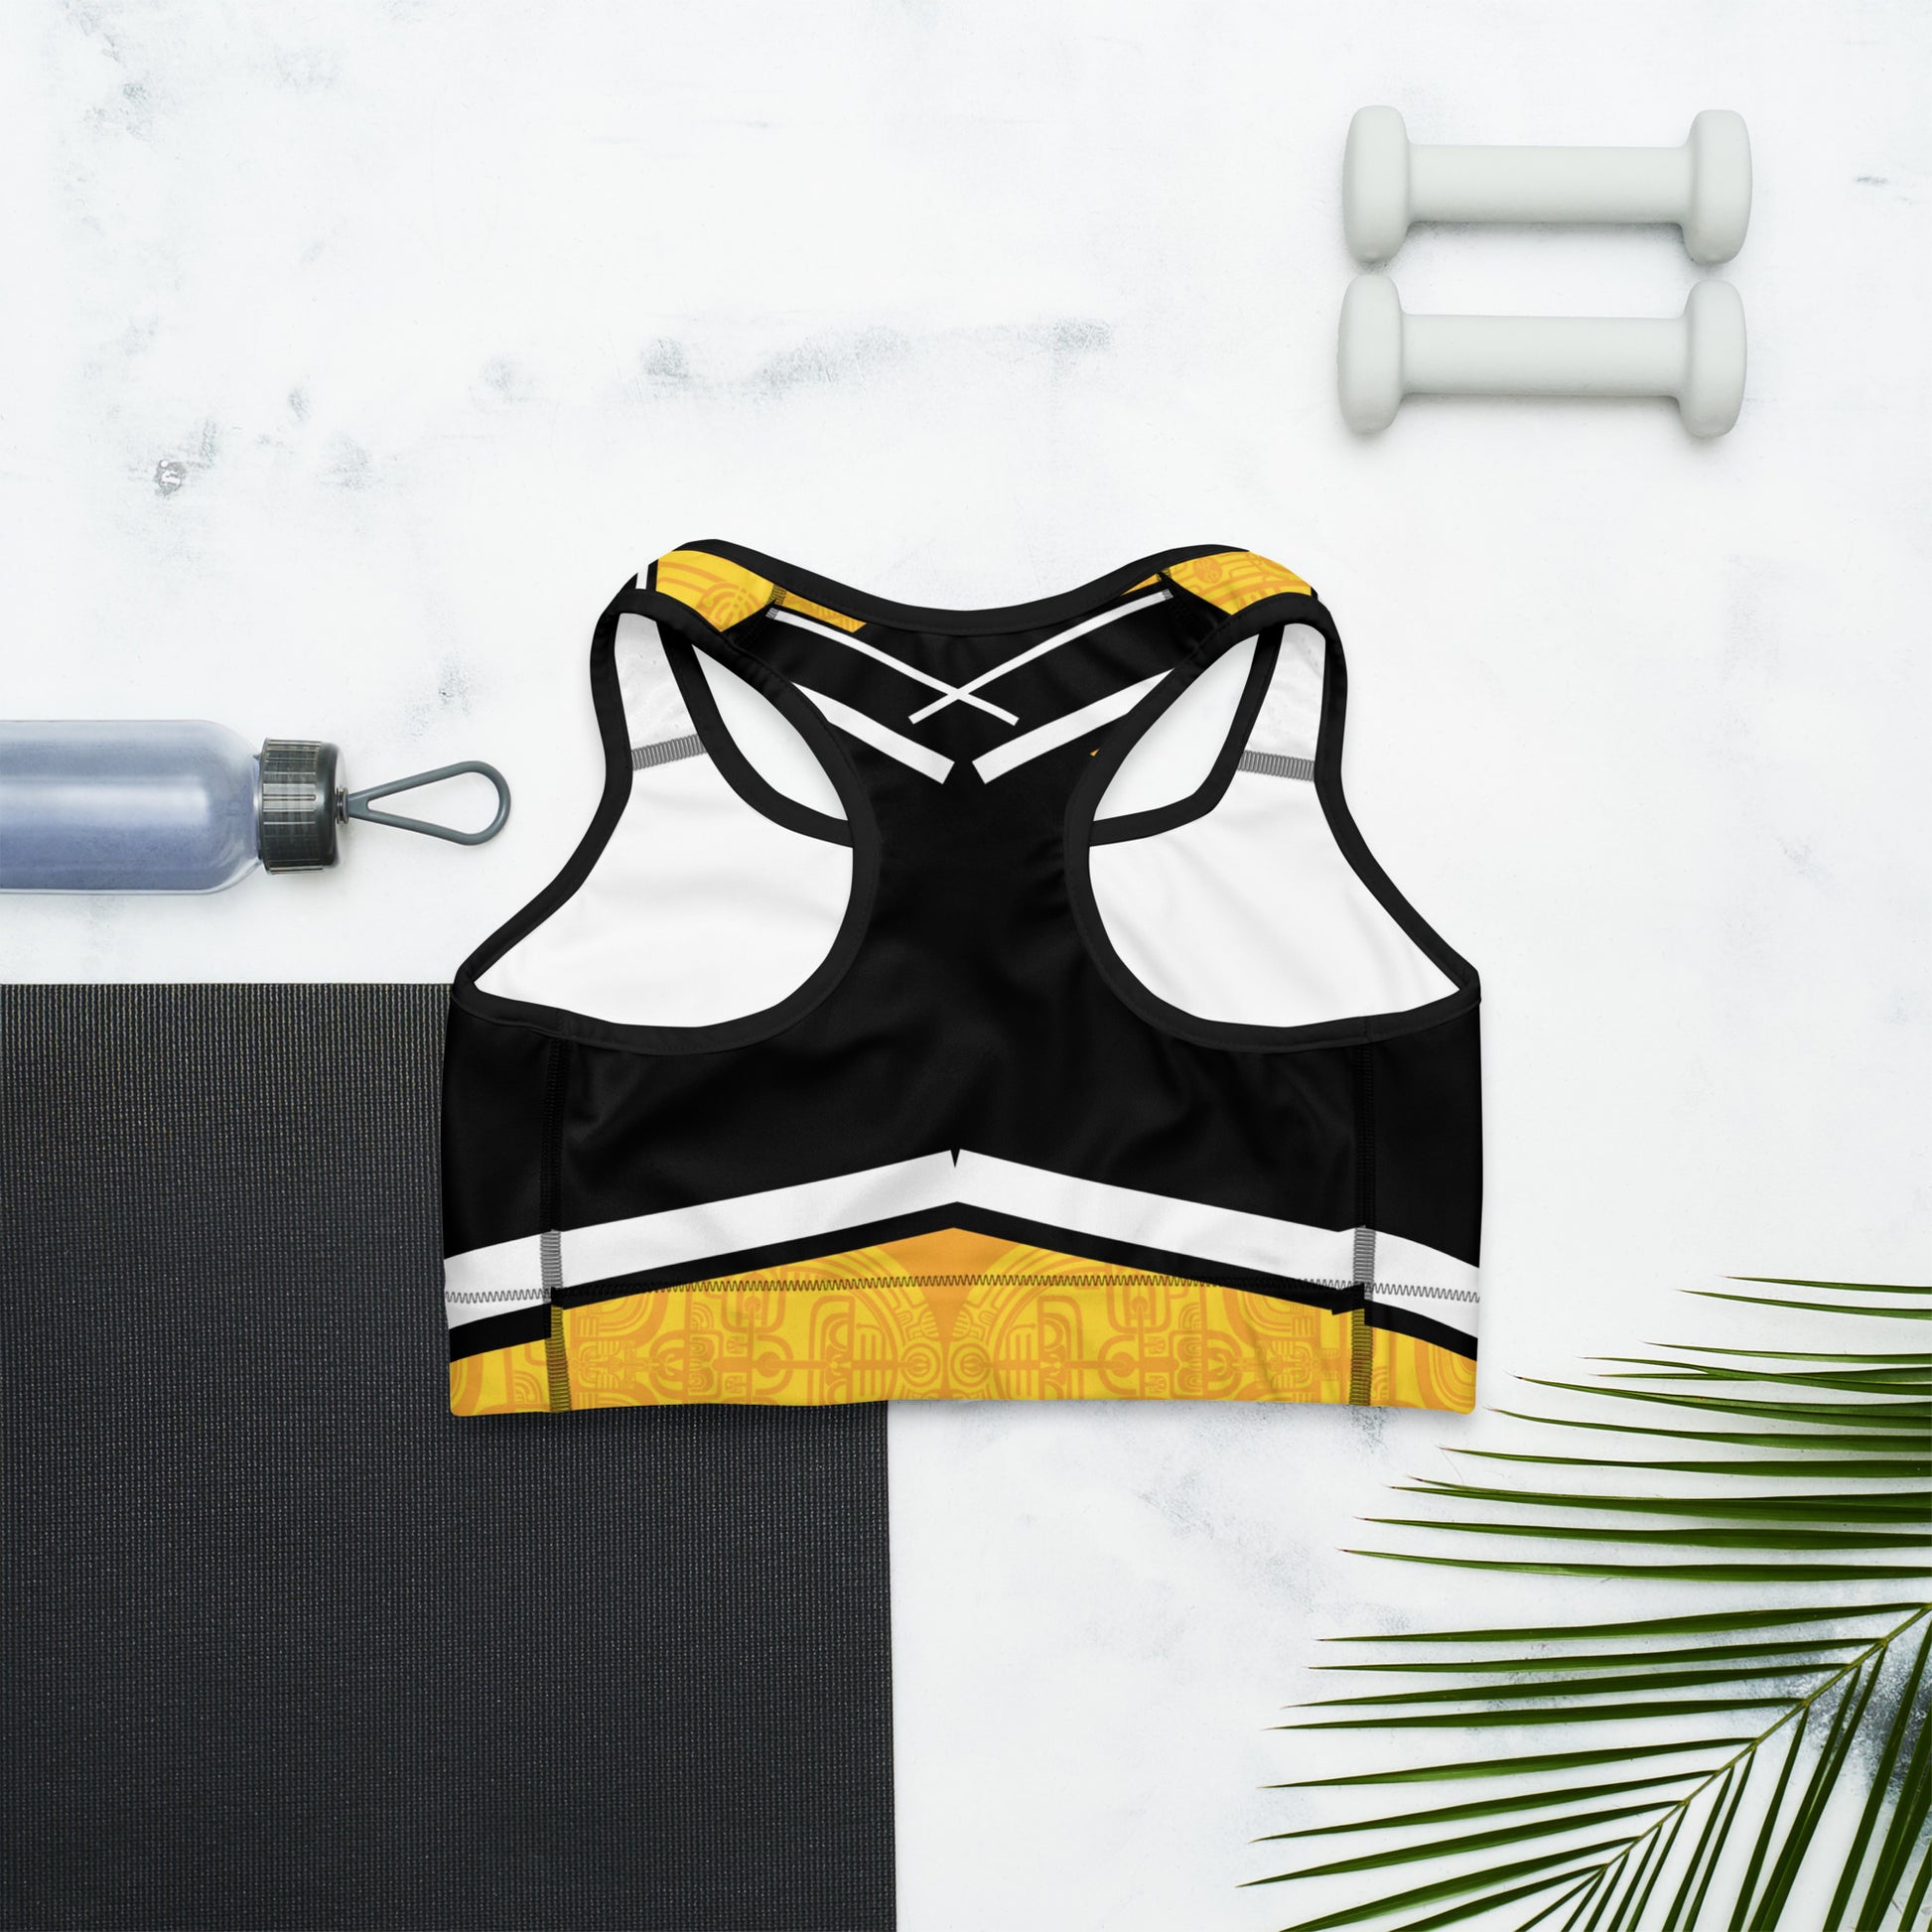 Polynesian Style Yellow Graphic Sports bra